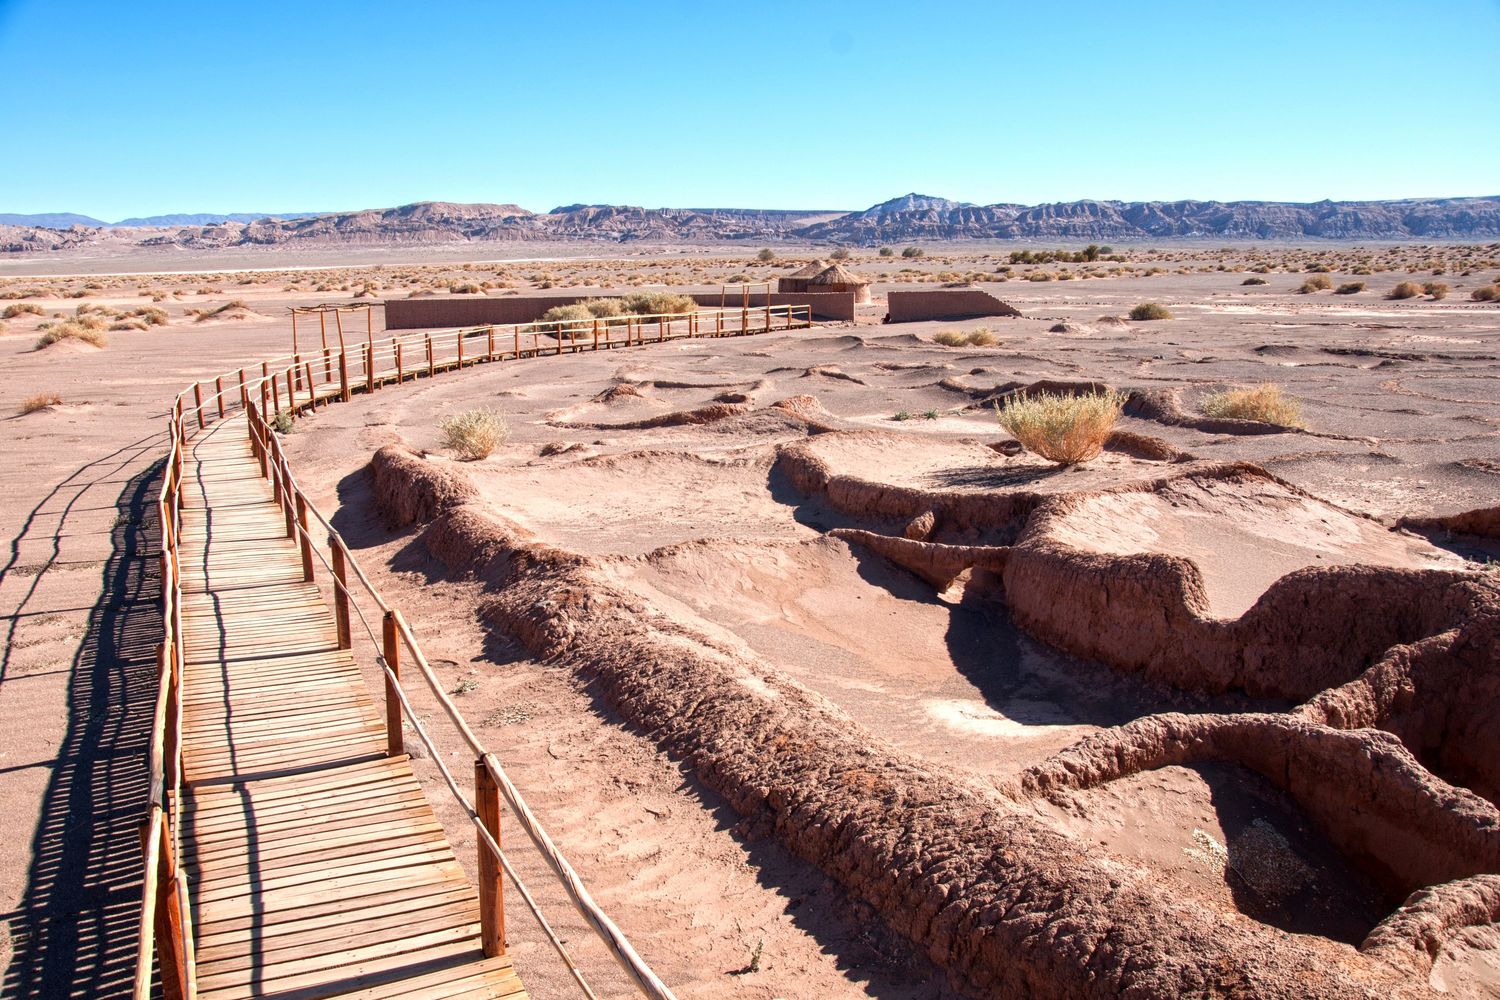 Ancient Tulor Village in the Atacama Desert.